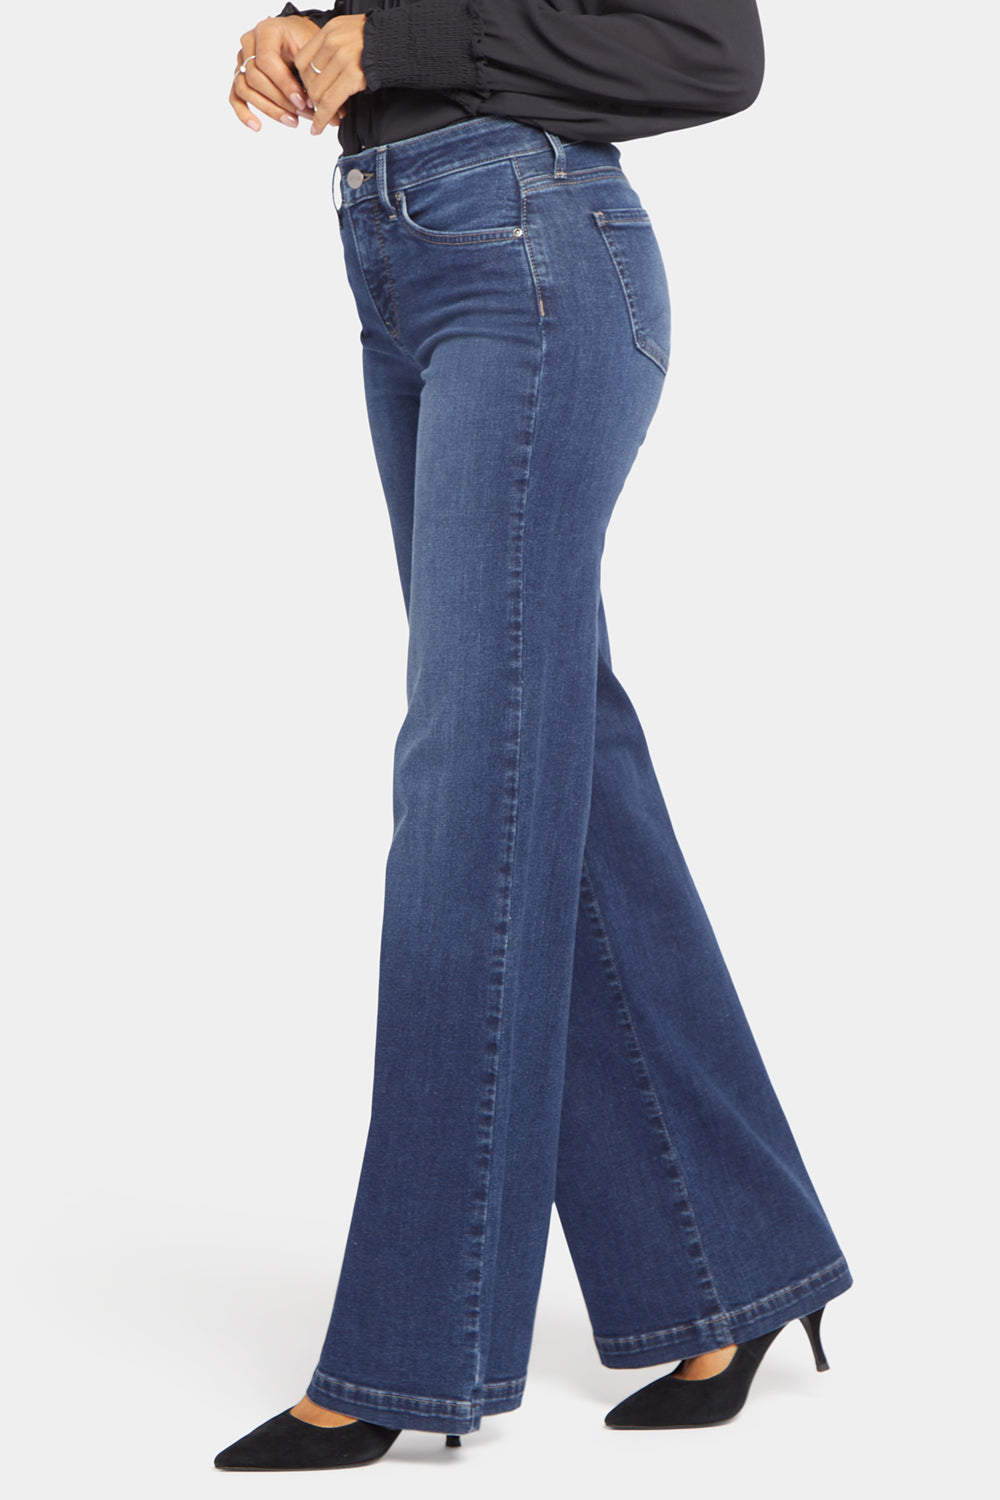 NYDJ Teresa Wide Leg Jeans  - Crockett